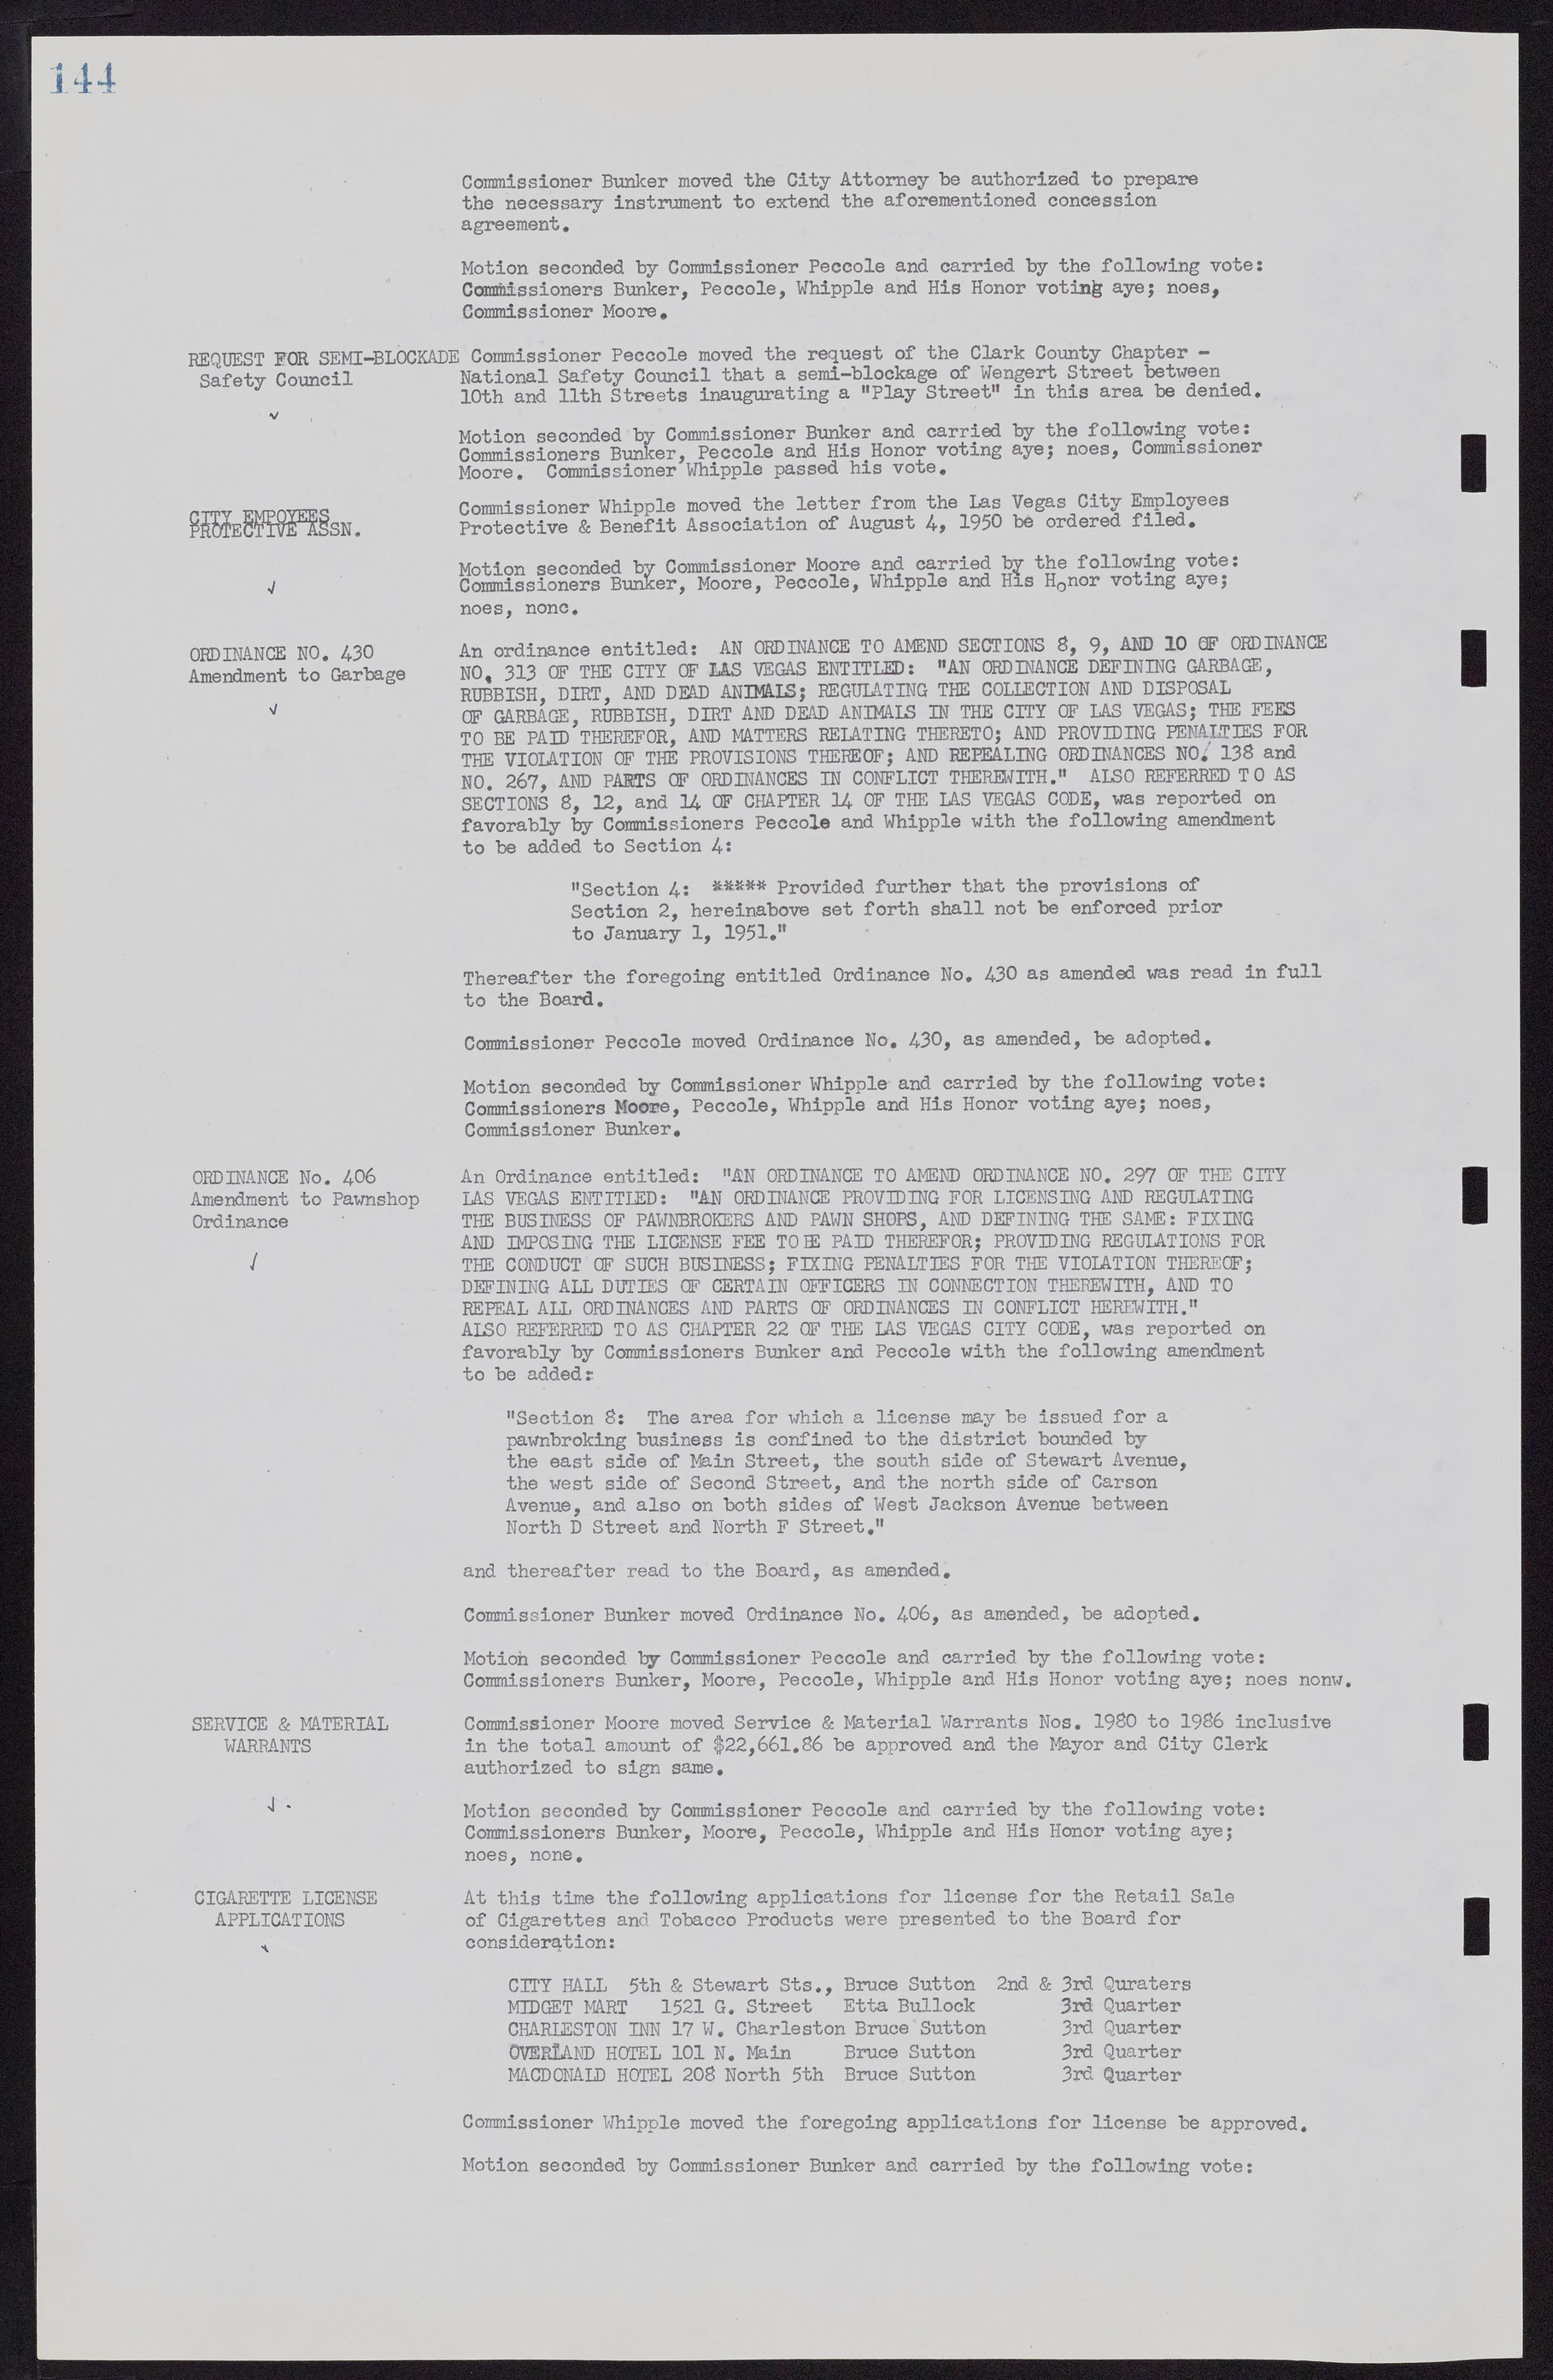 Las Vegas City Commission Minutes, November 7, 1949 to May 21, 1952, lvc000007-154